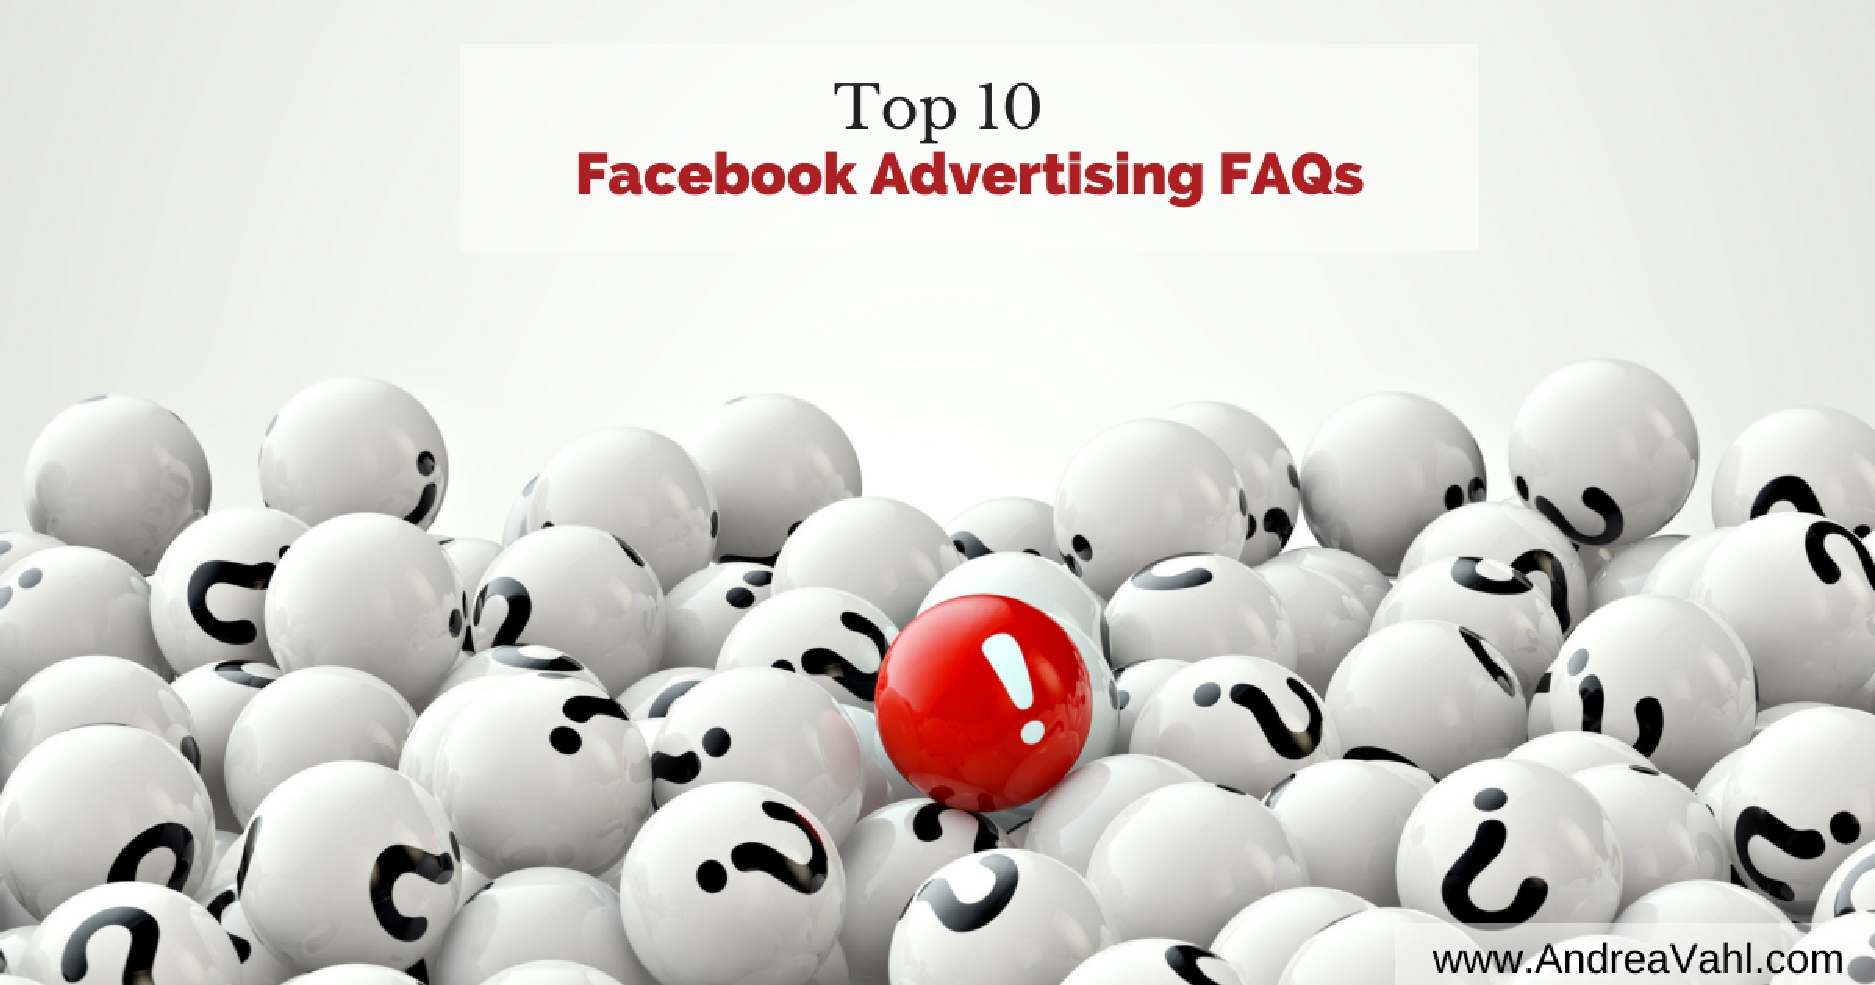 Top 10 Facebook Advertising FAQs